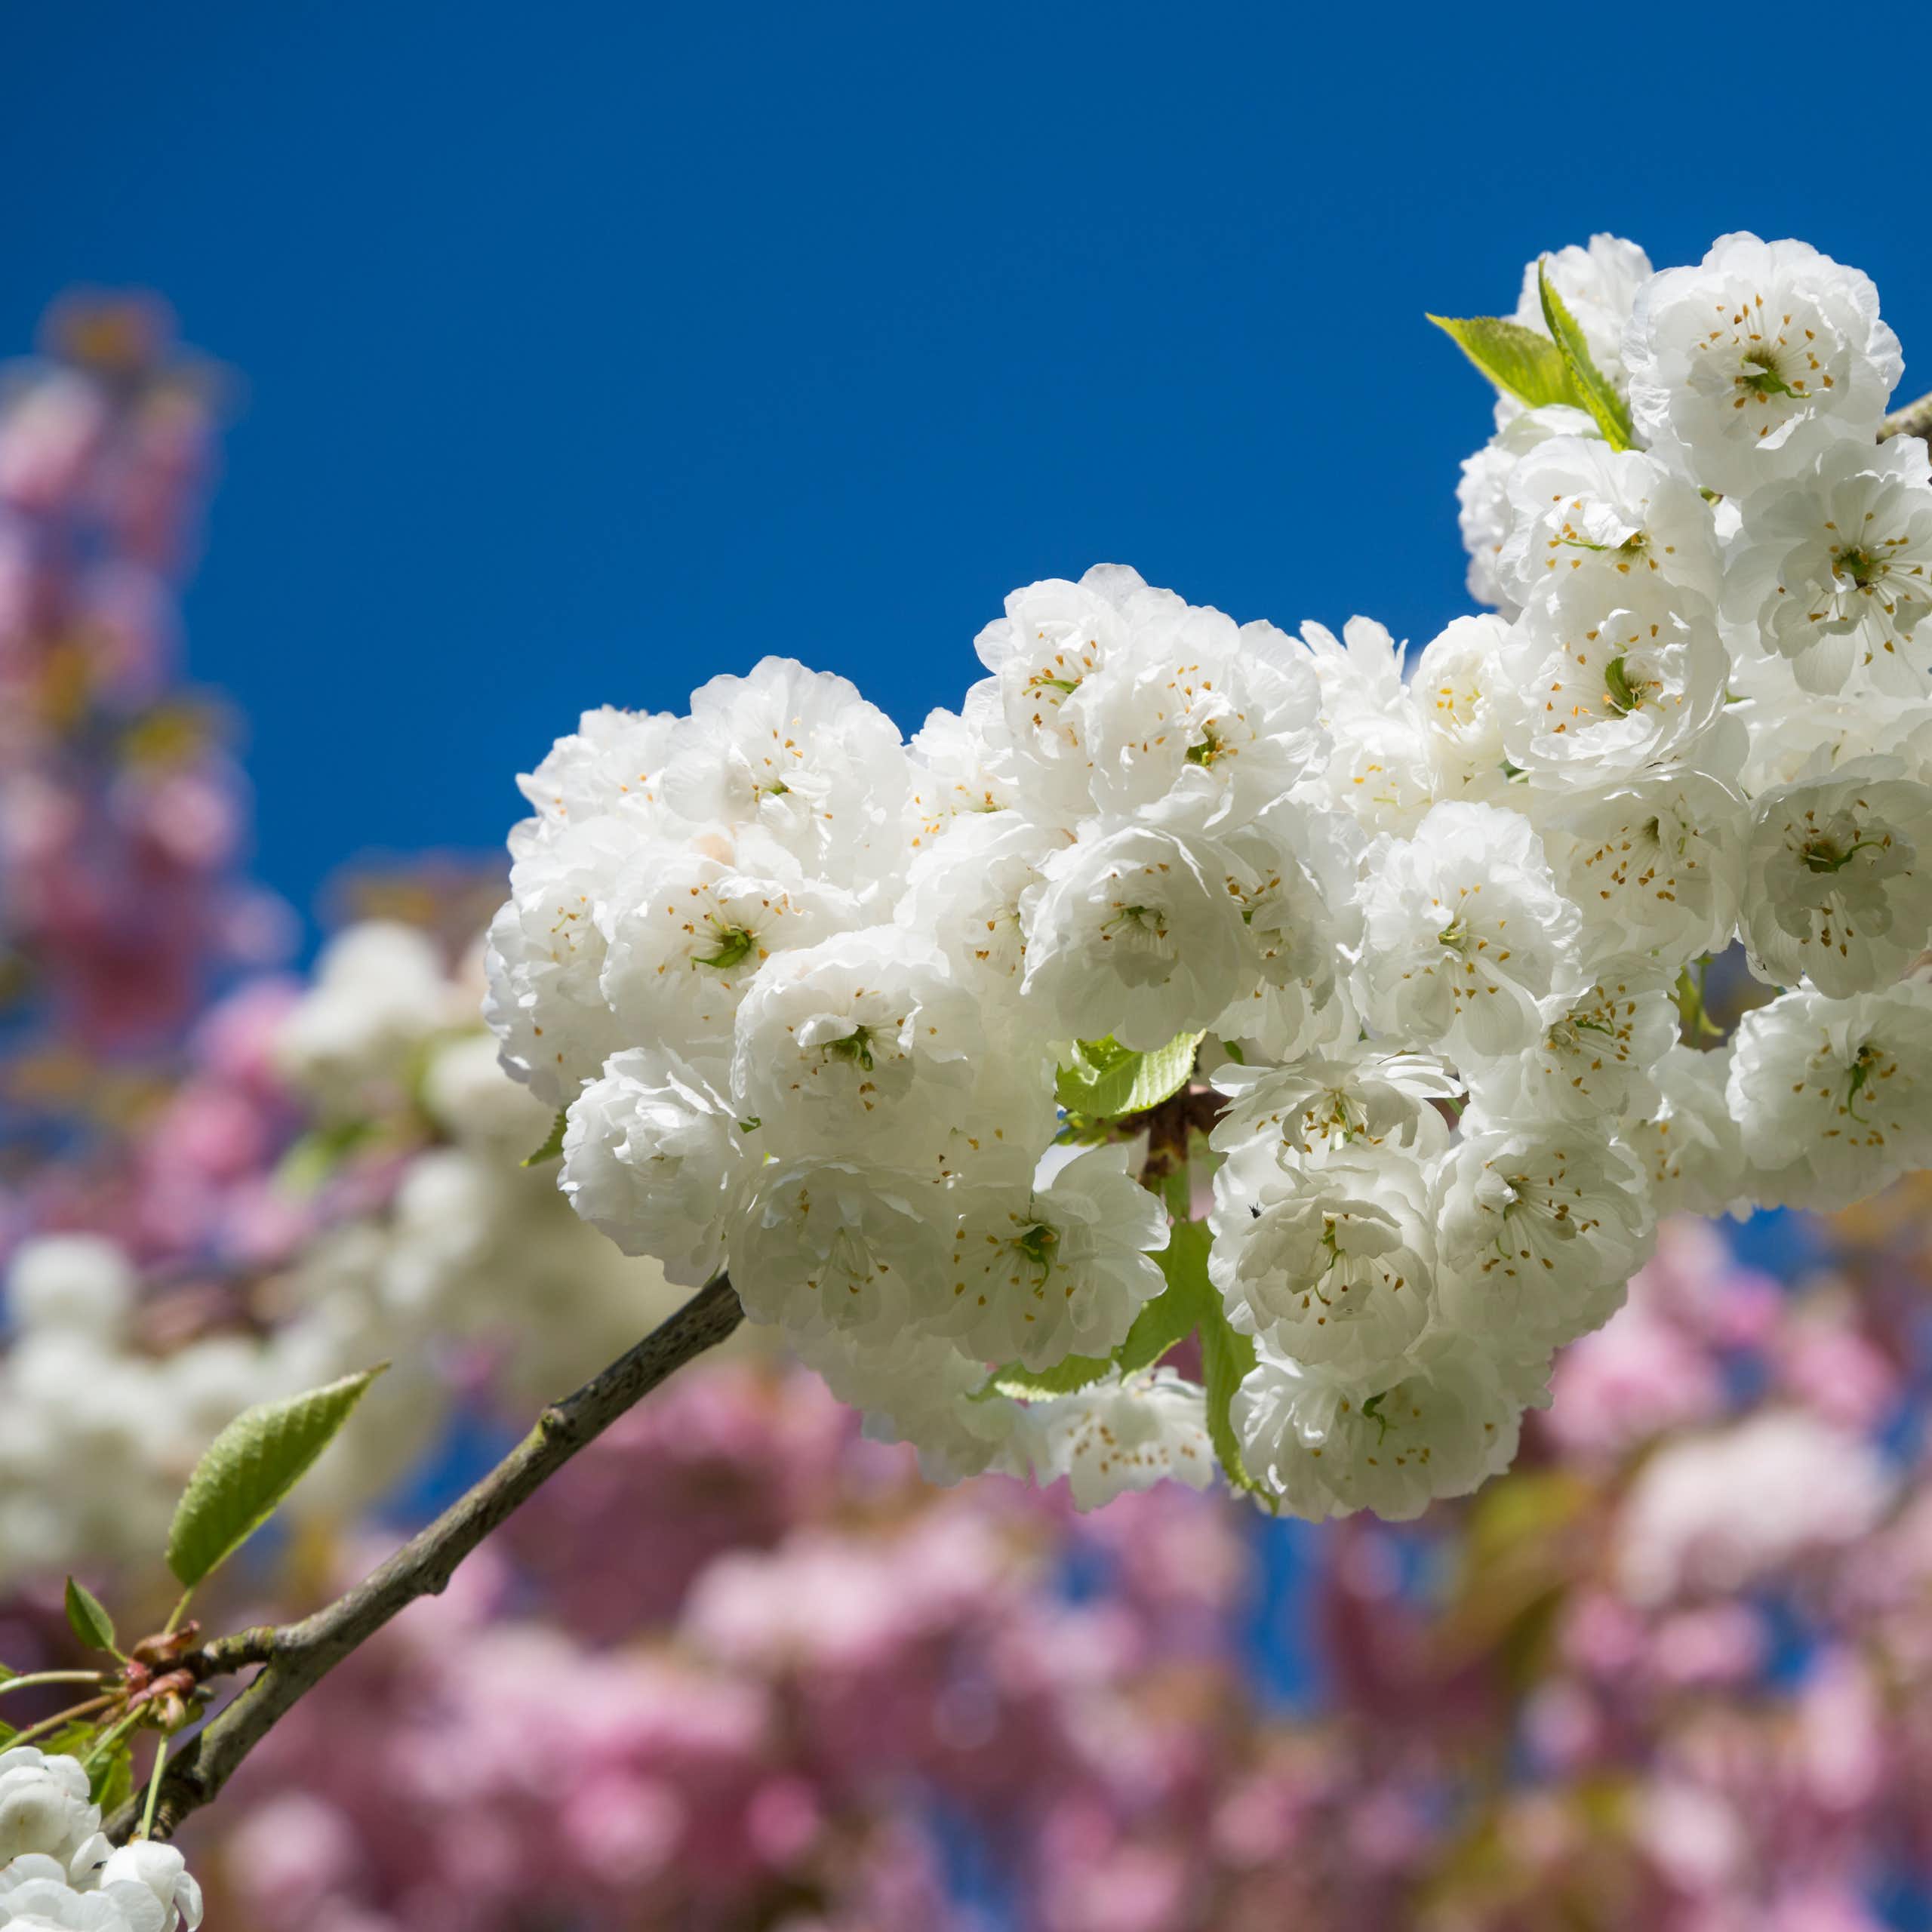 White blossoms on a blue sky.